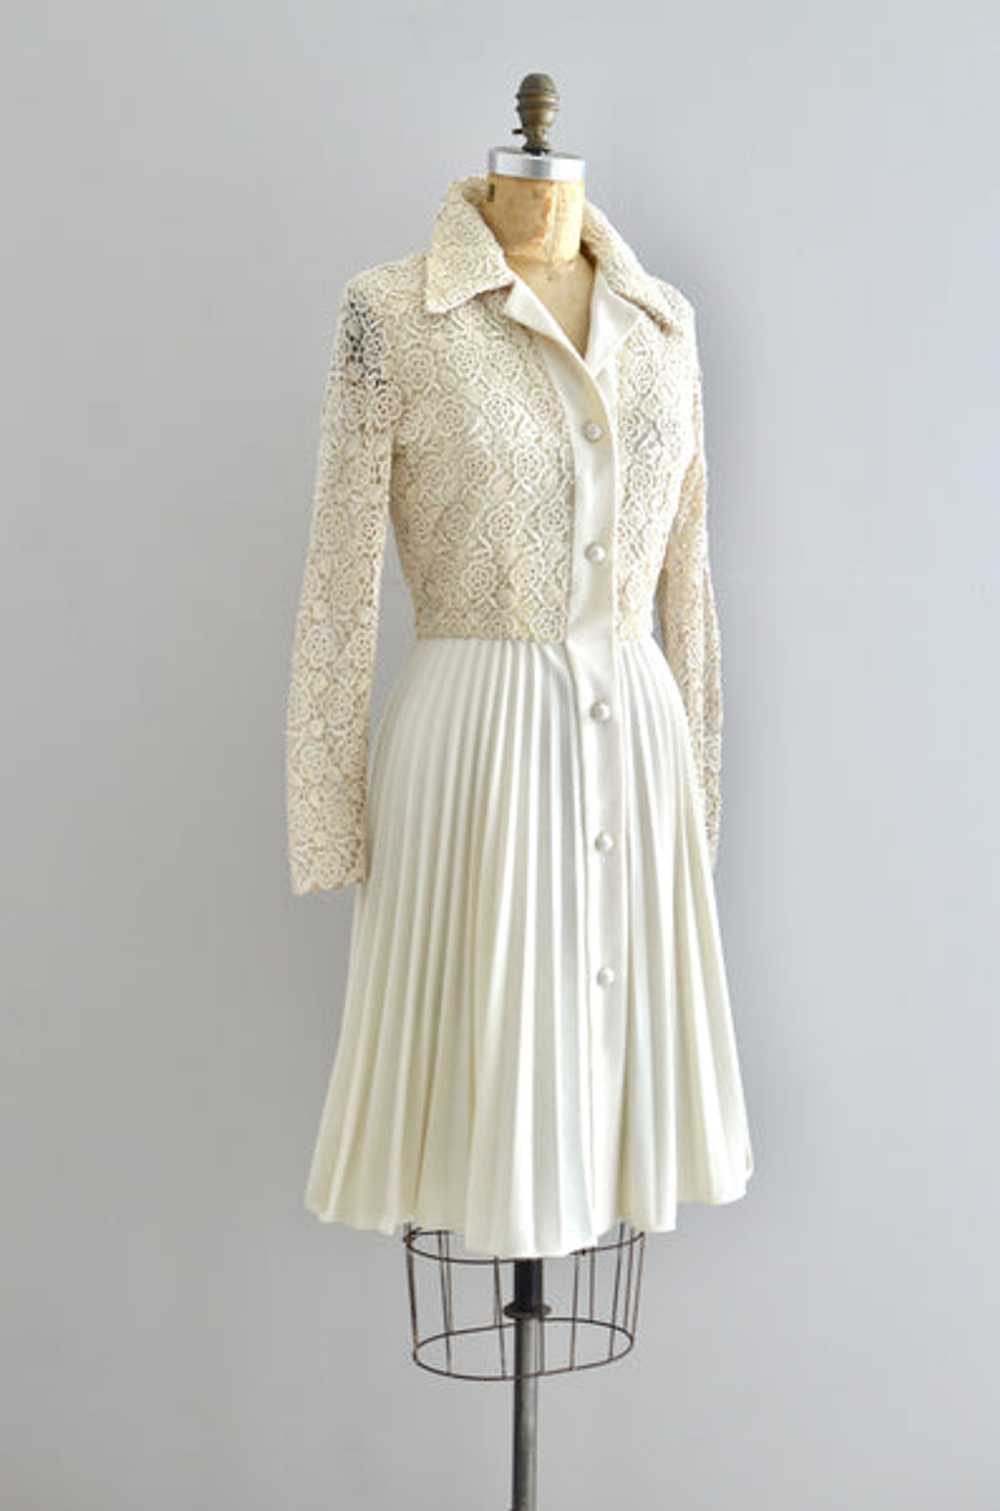 1970s Lace Dress - image 3